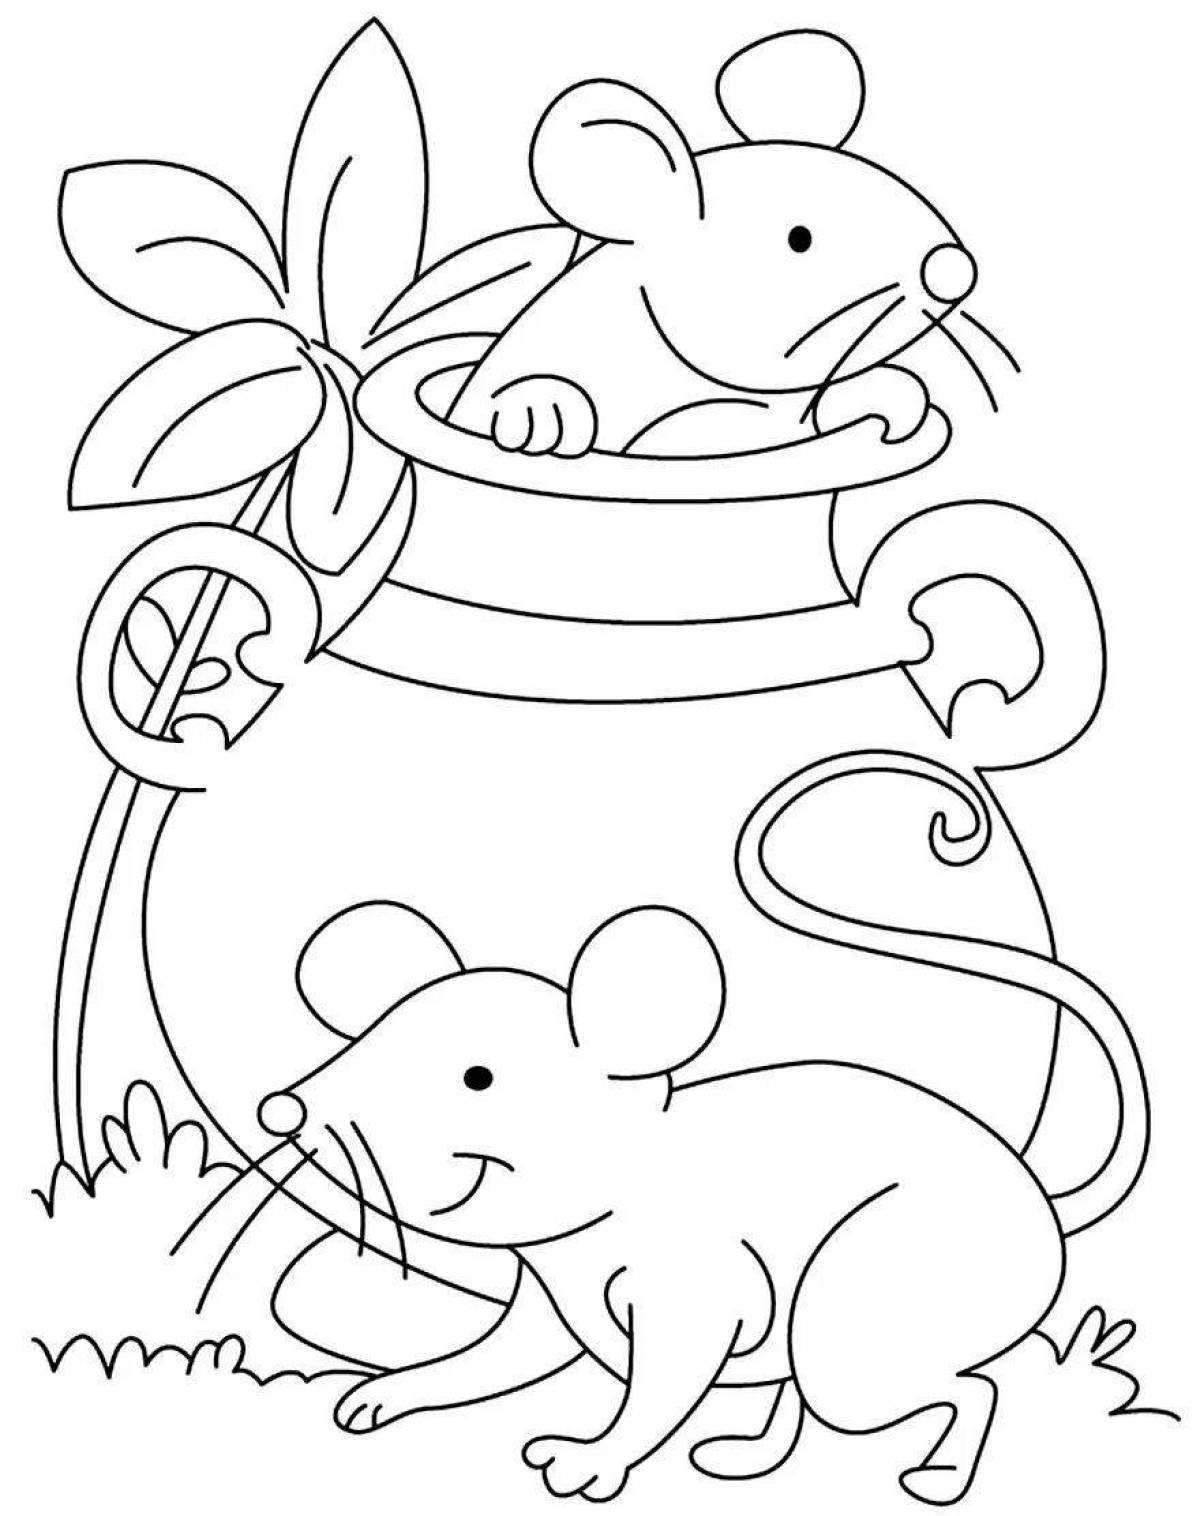 Гламурная раскраска мышь для детей 2-3 лет